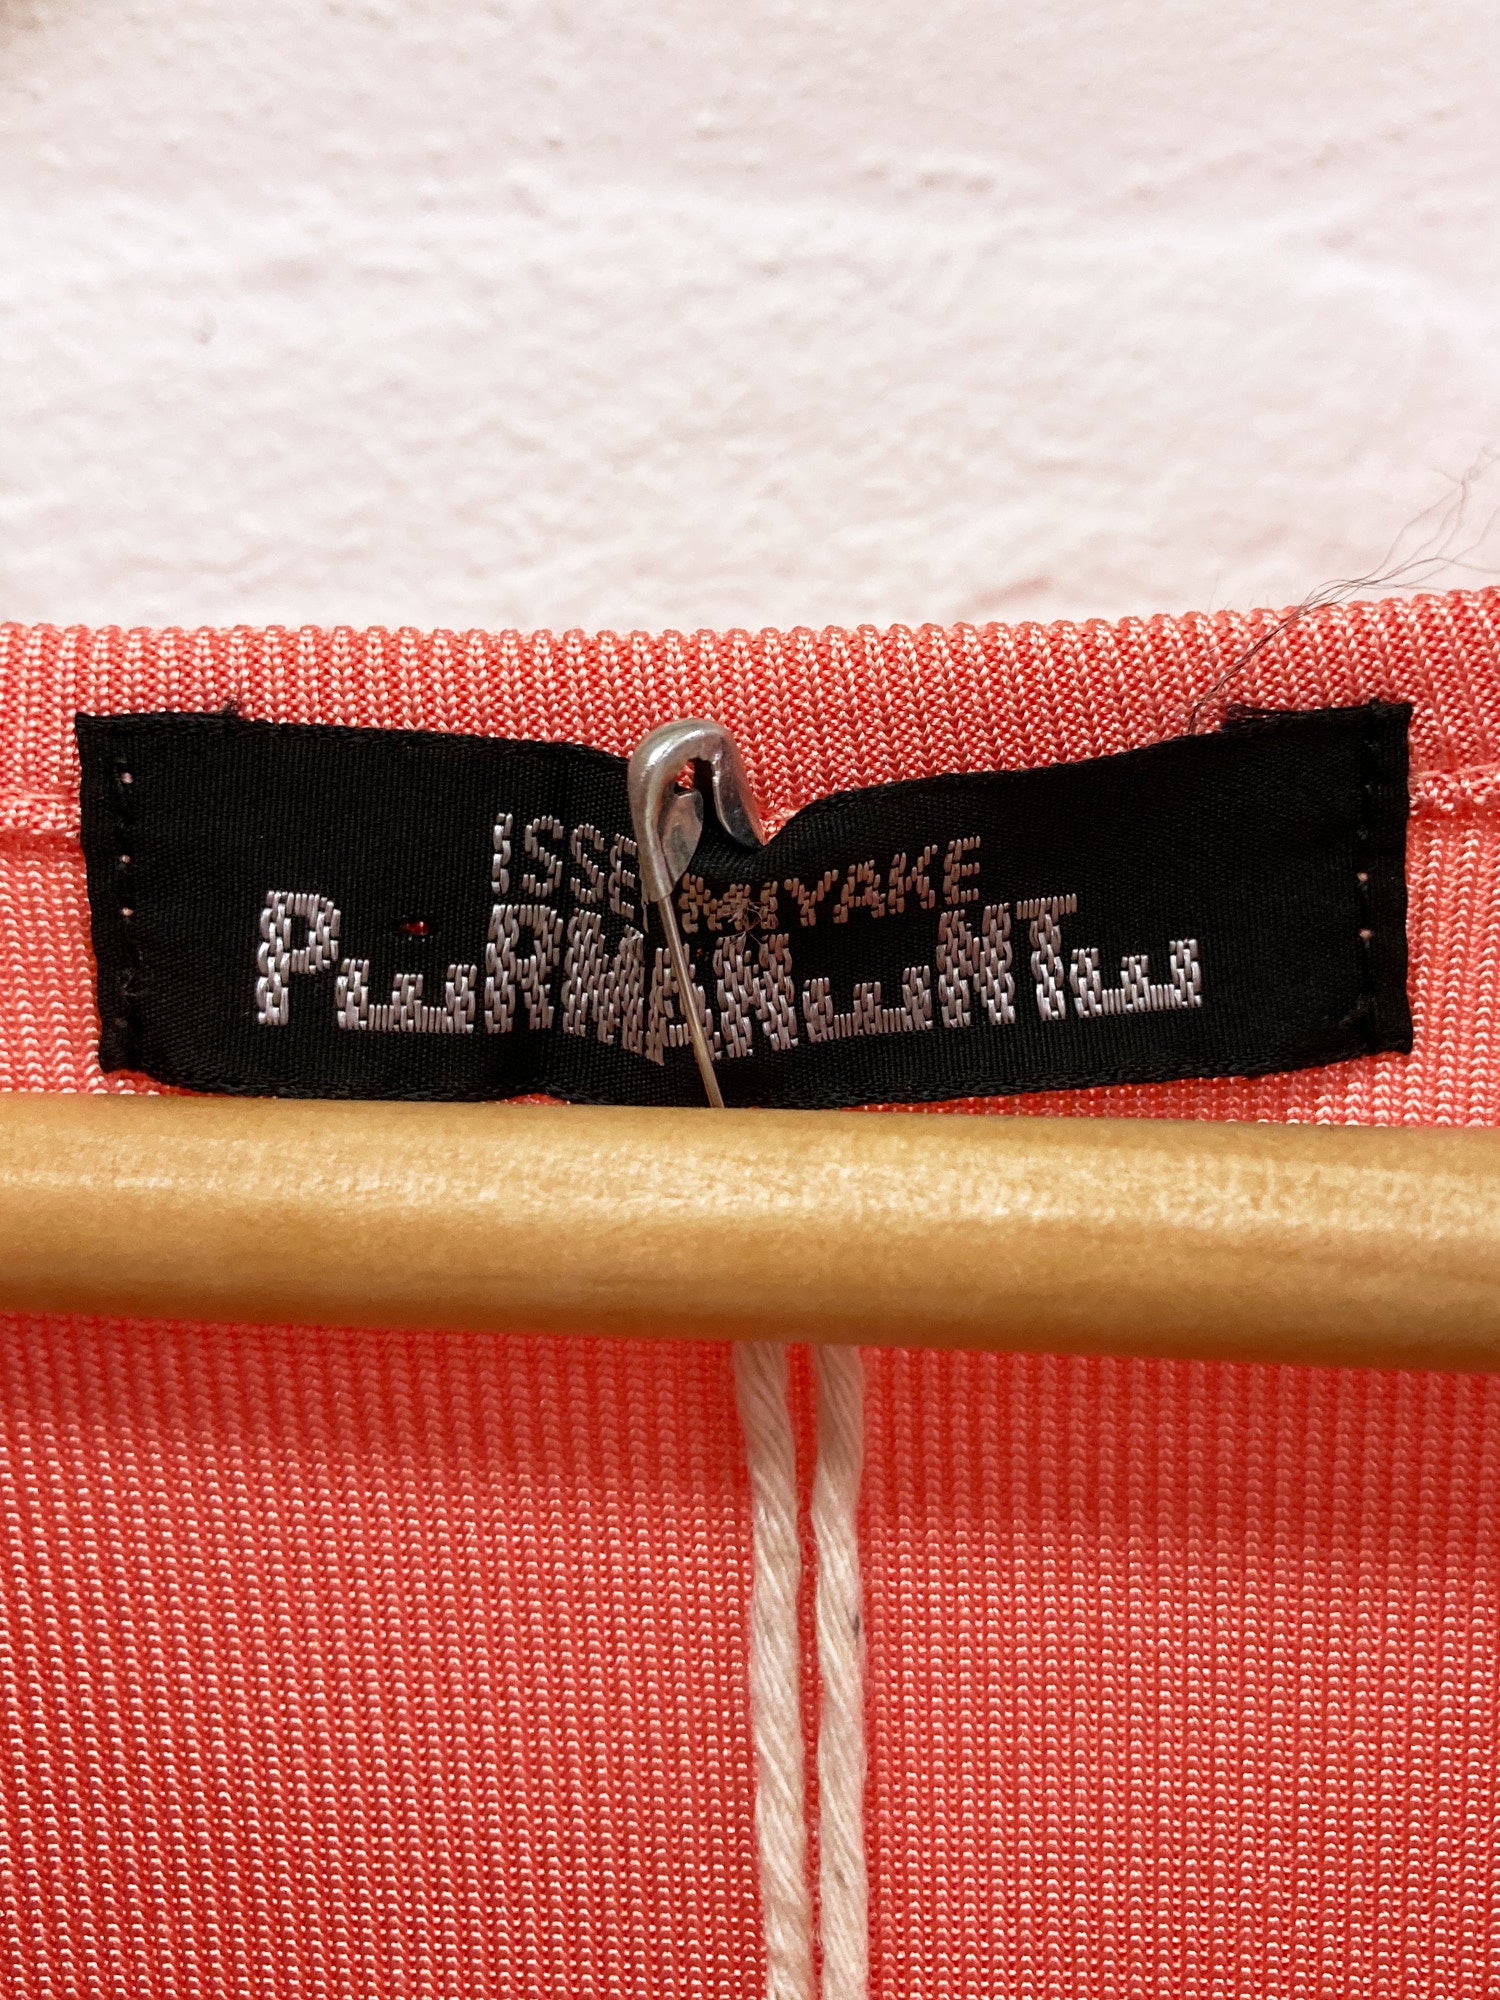 Issey Miyake Permanente 1980s sheeny pink rib knit sleeveless top